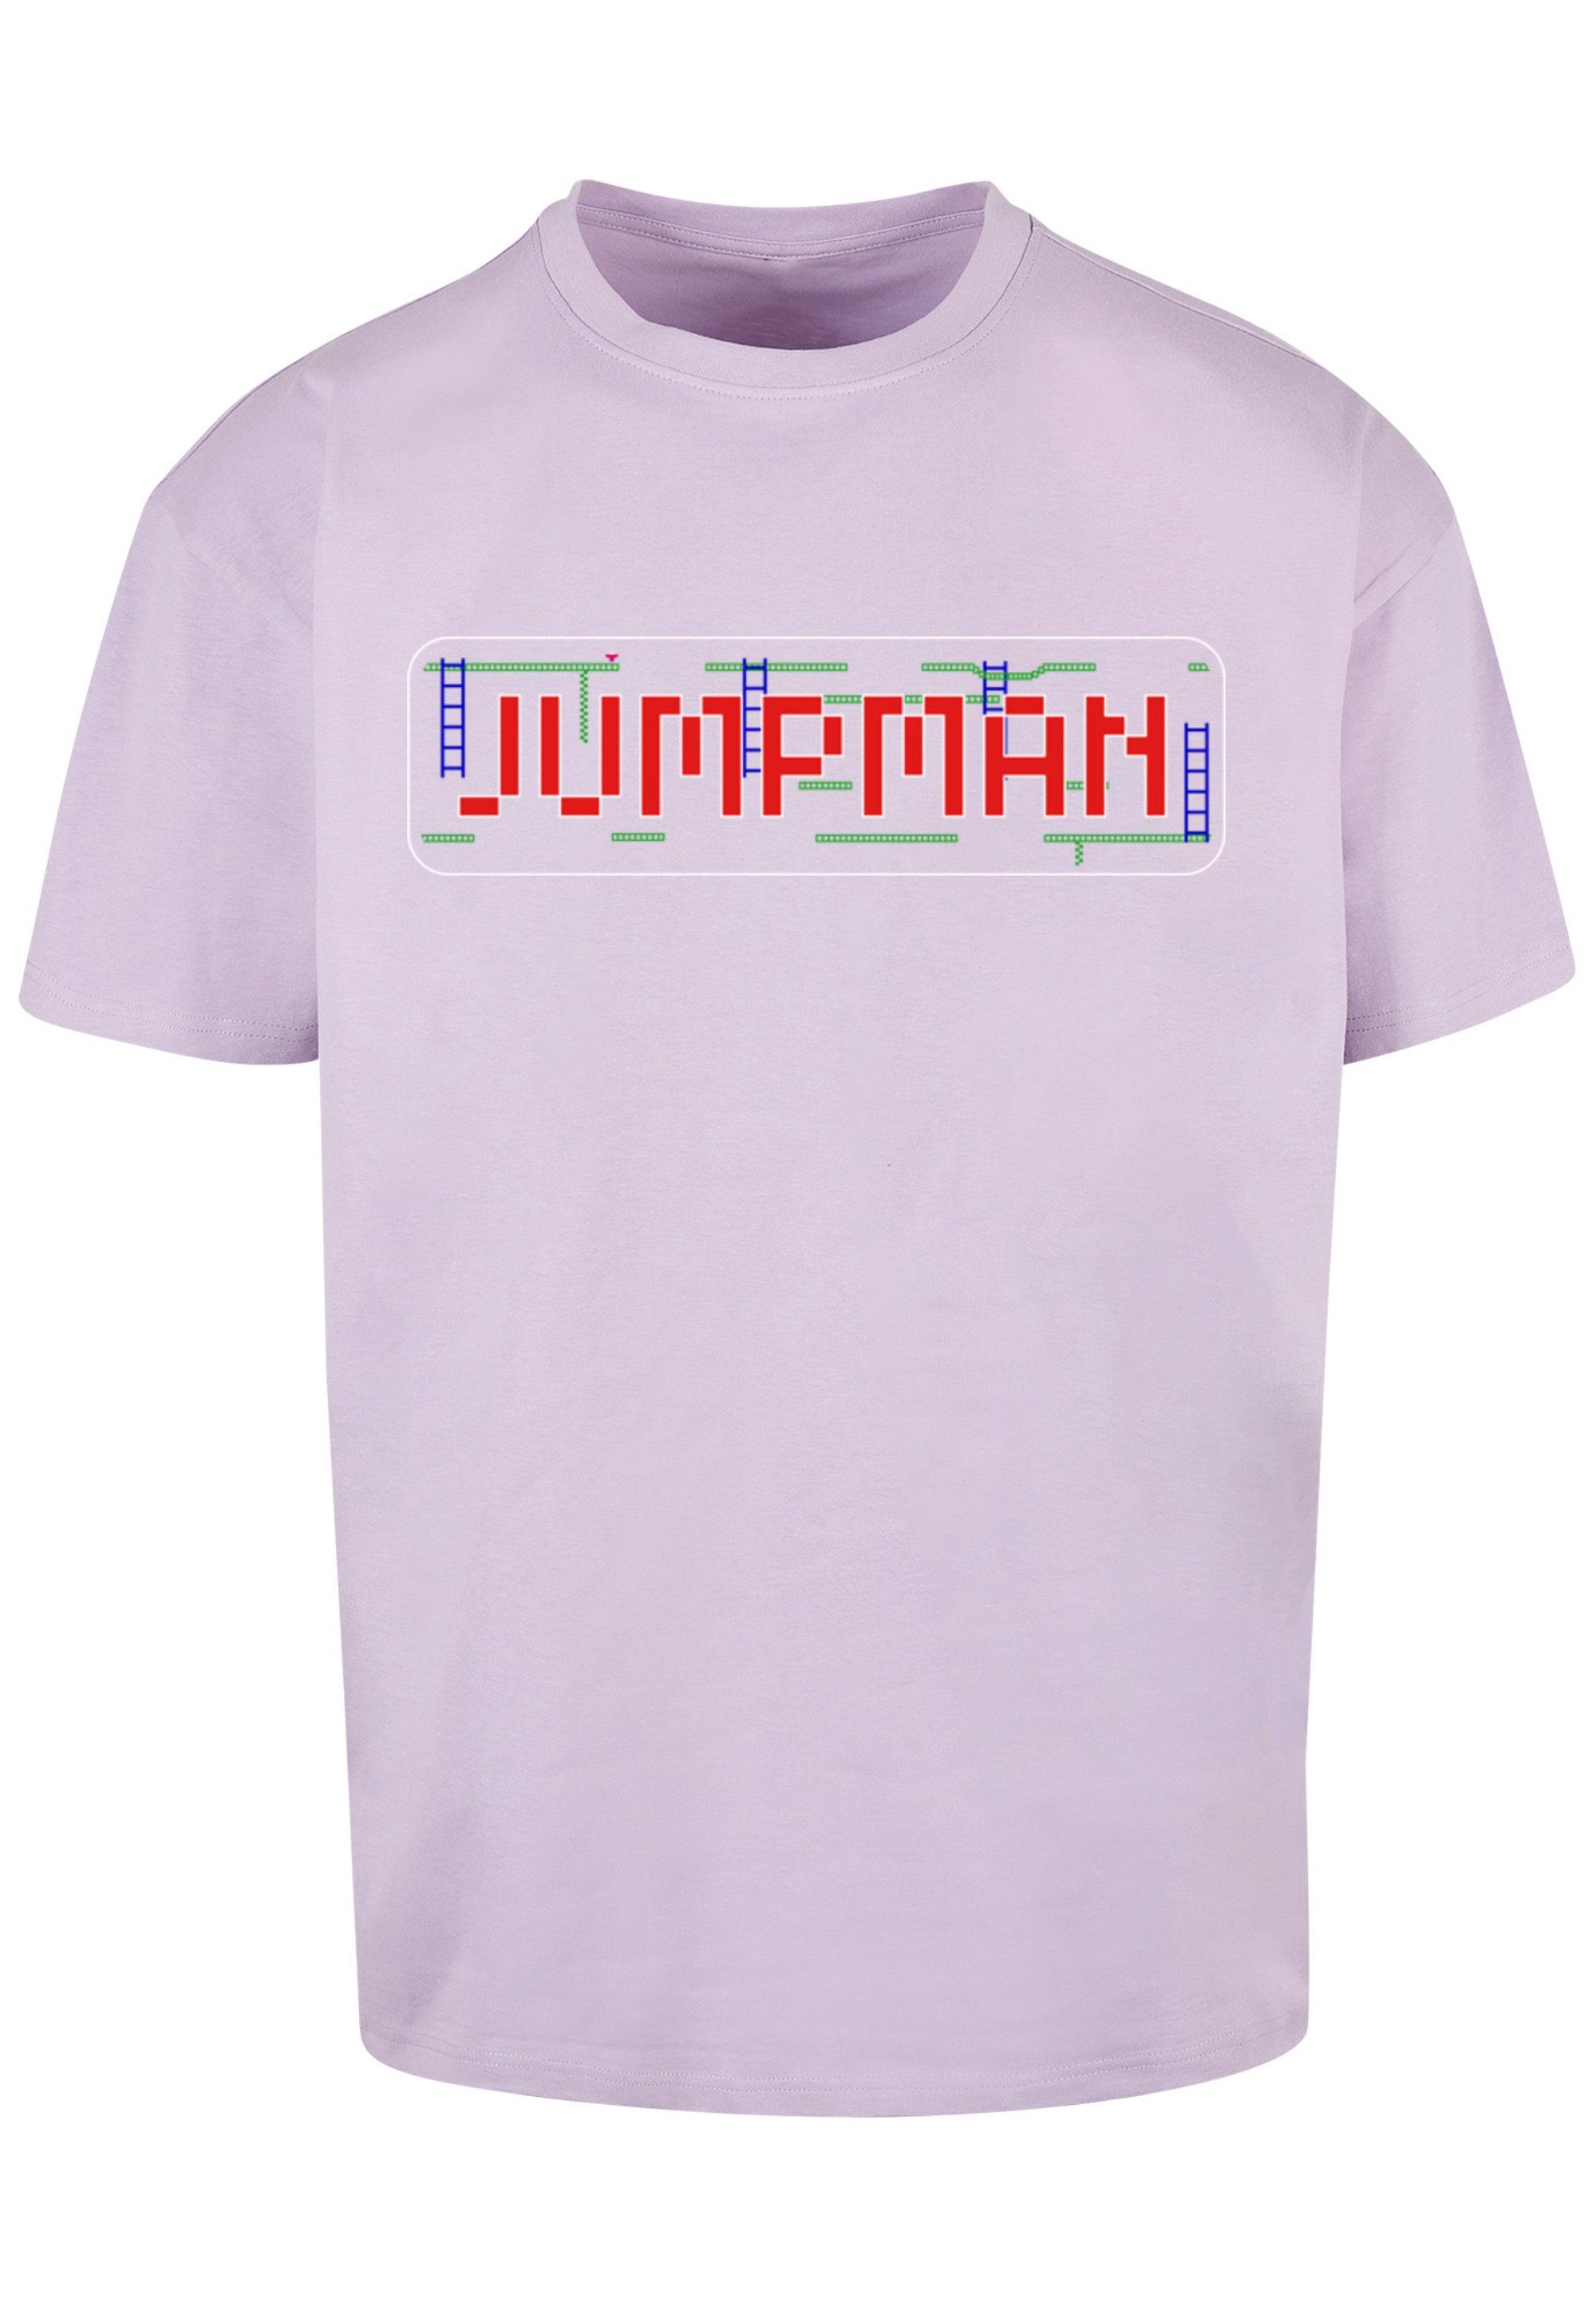 F4NT4STIC T-Shirt lilac Jumpman C64 Print SEVENSQUARED Retro Gaming